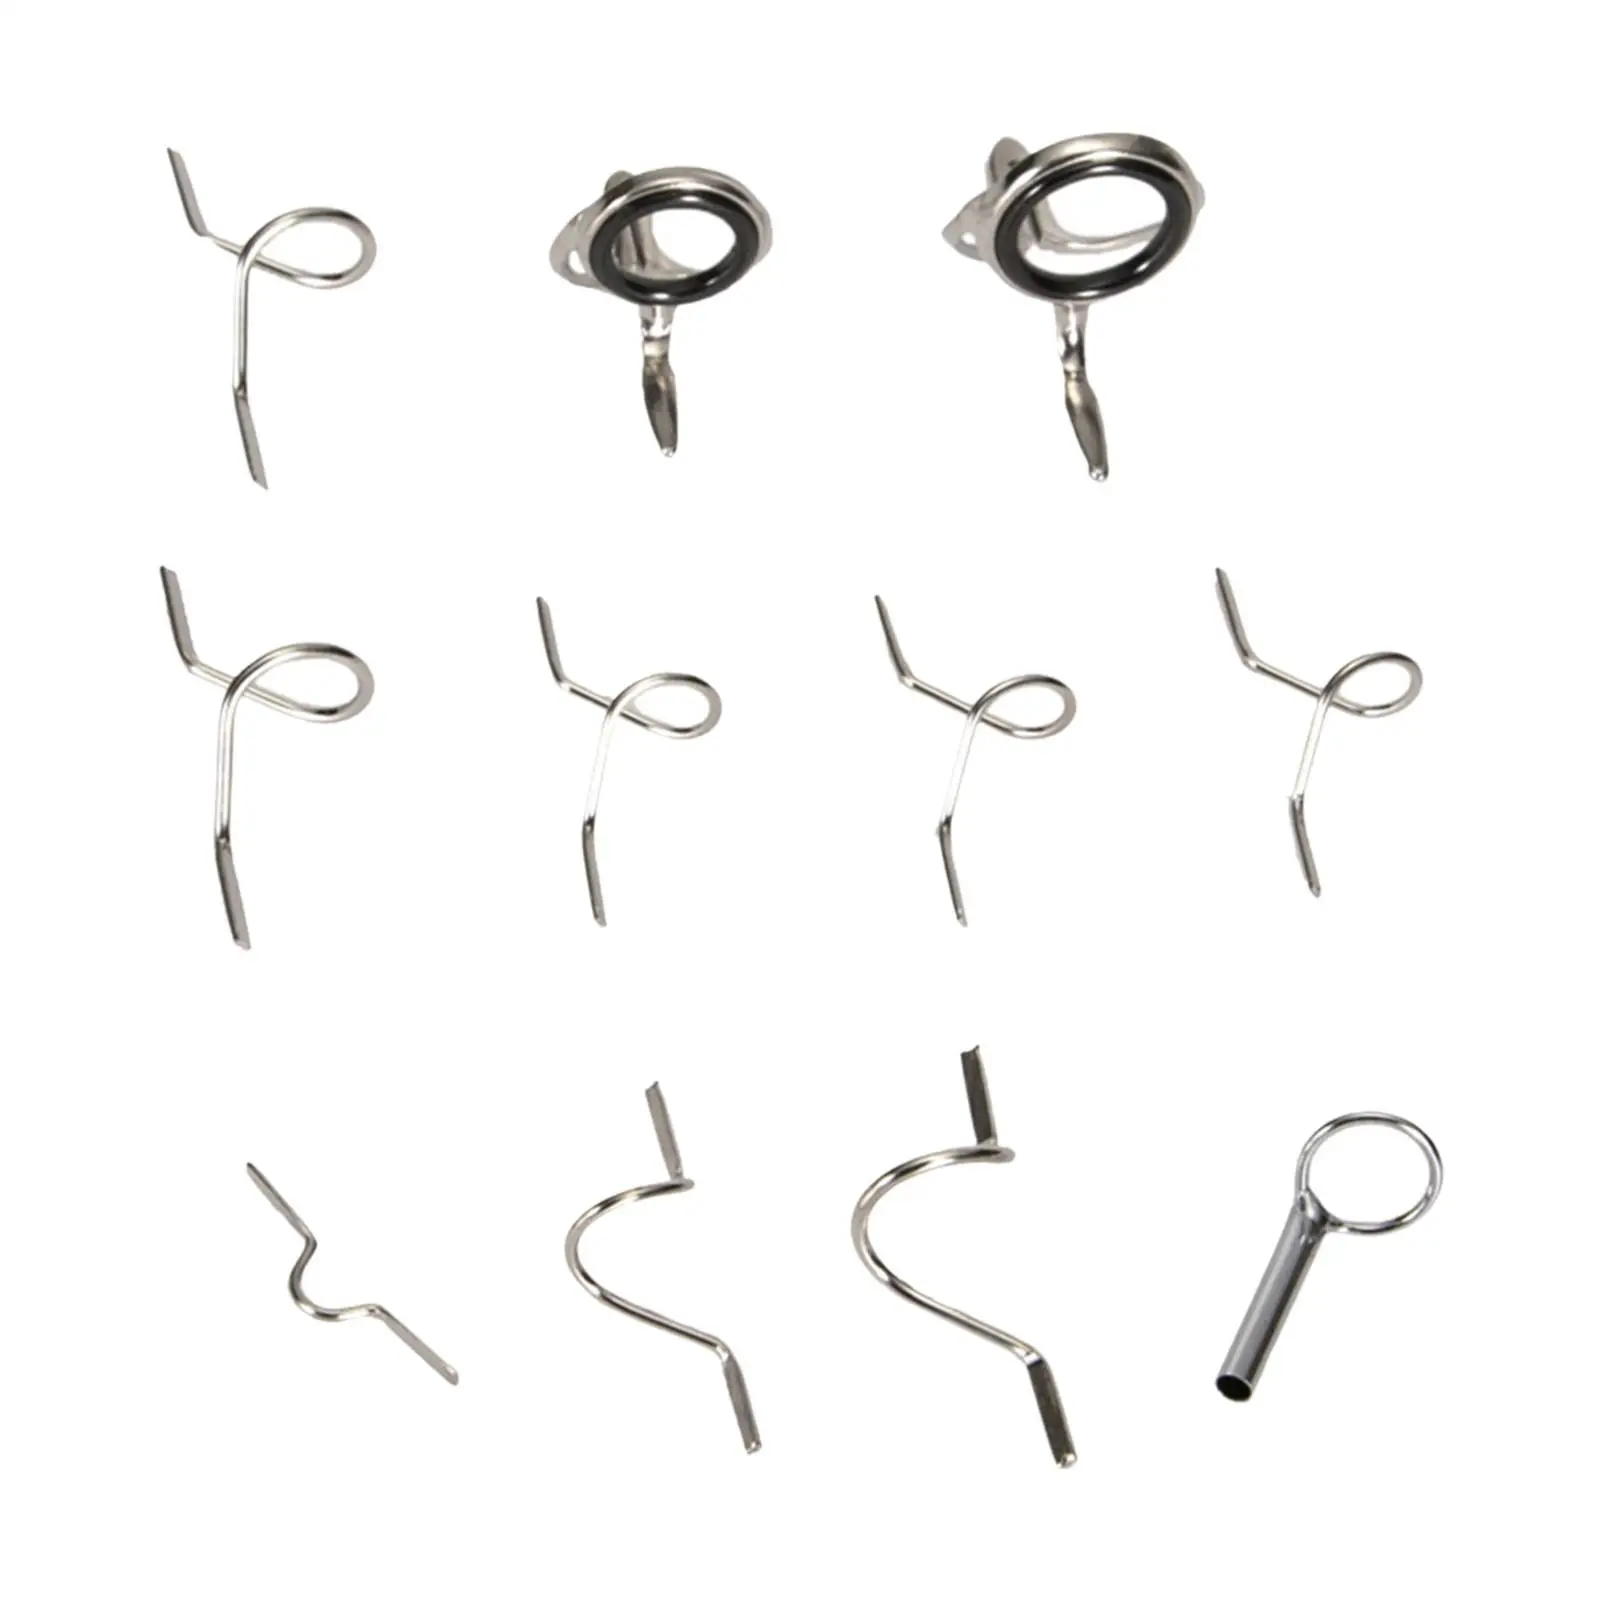 9FT 4-6WT Fly Fishing Rod Guide Building K Type Eye Rings Kits Hook Keeper